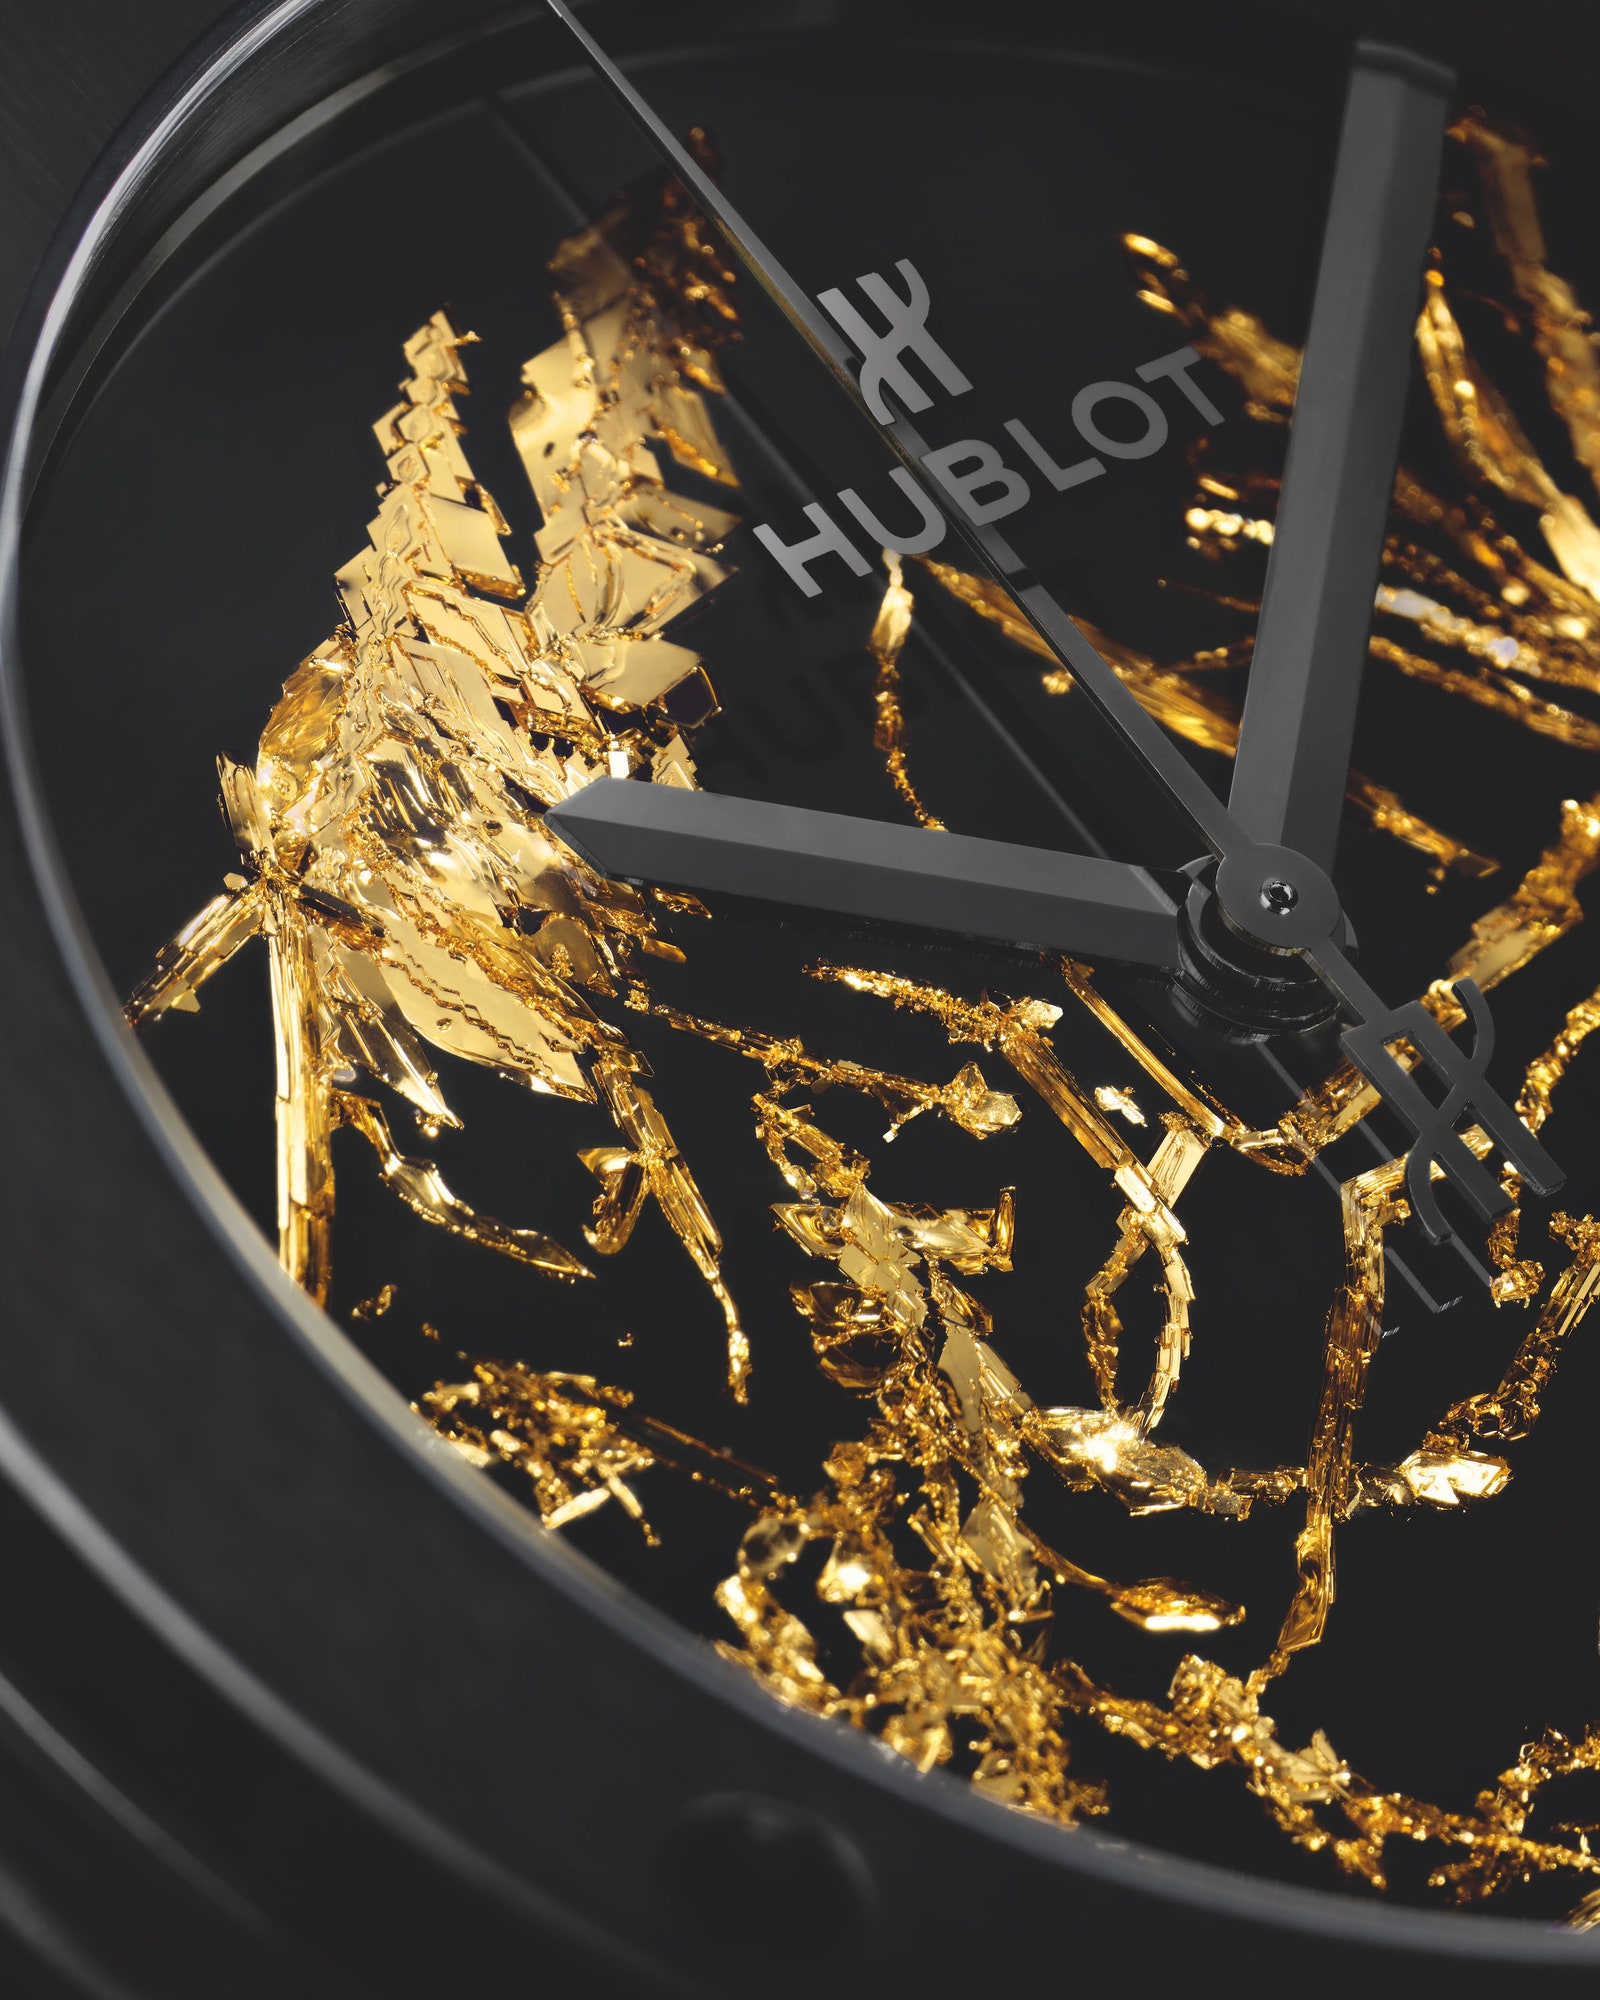 Бренд Hublot представил часы Classic Fusion Gold Crystal